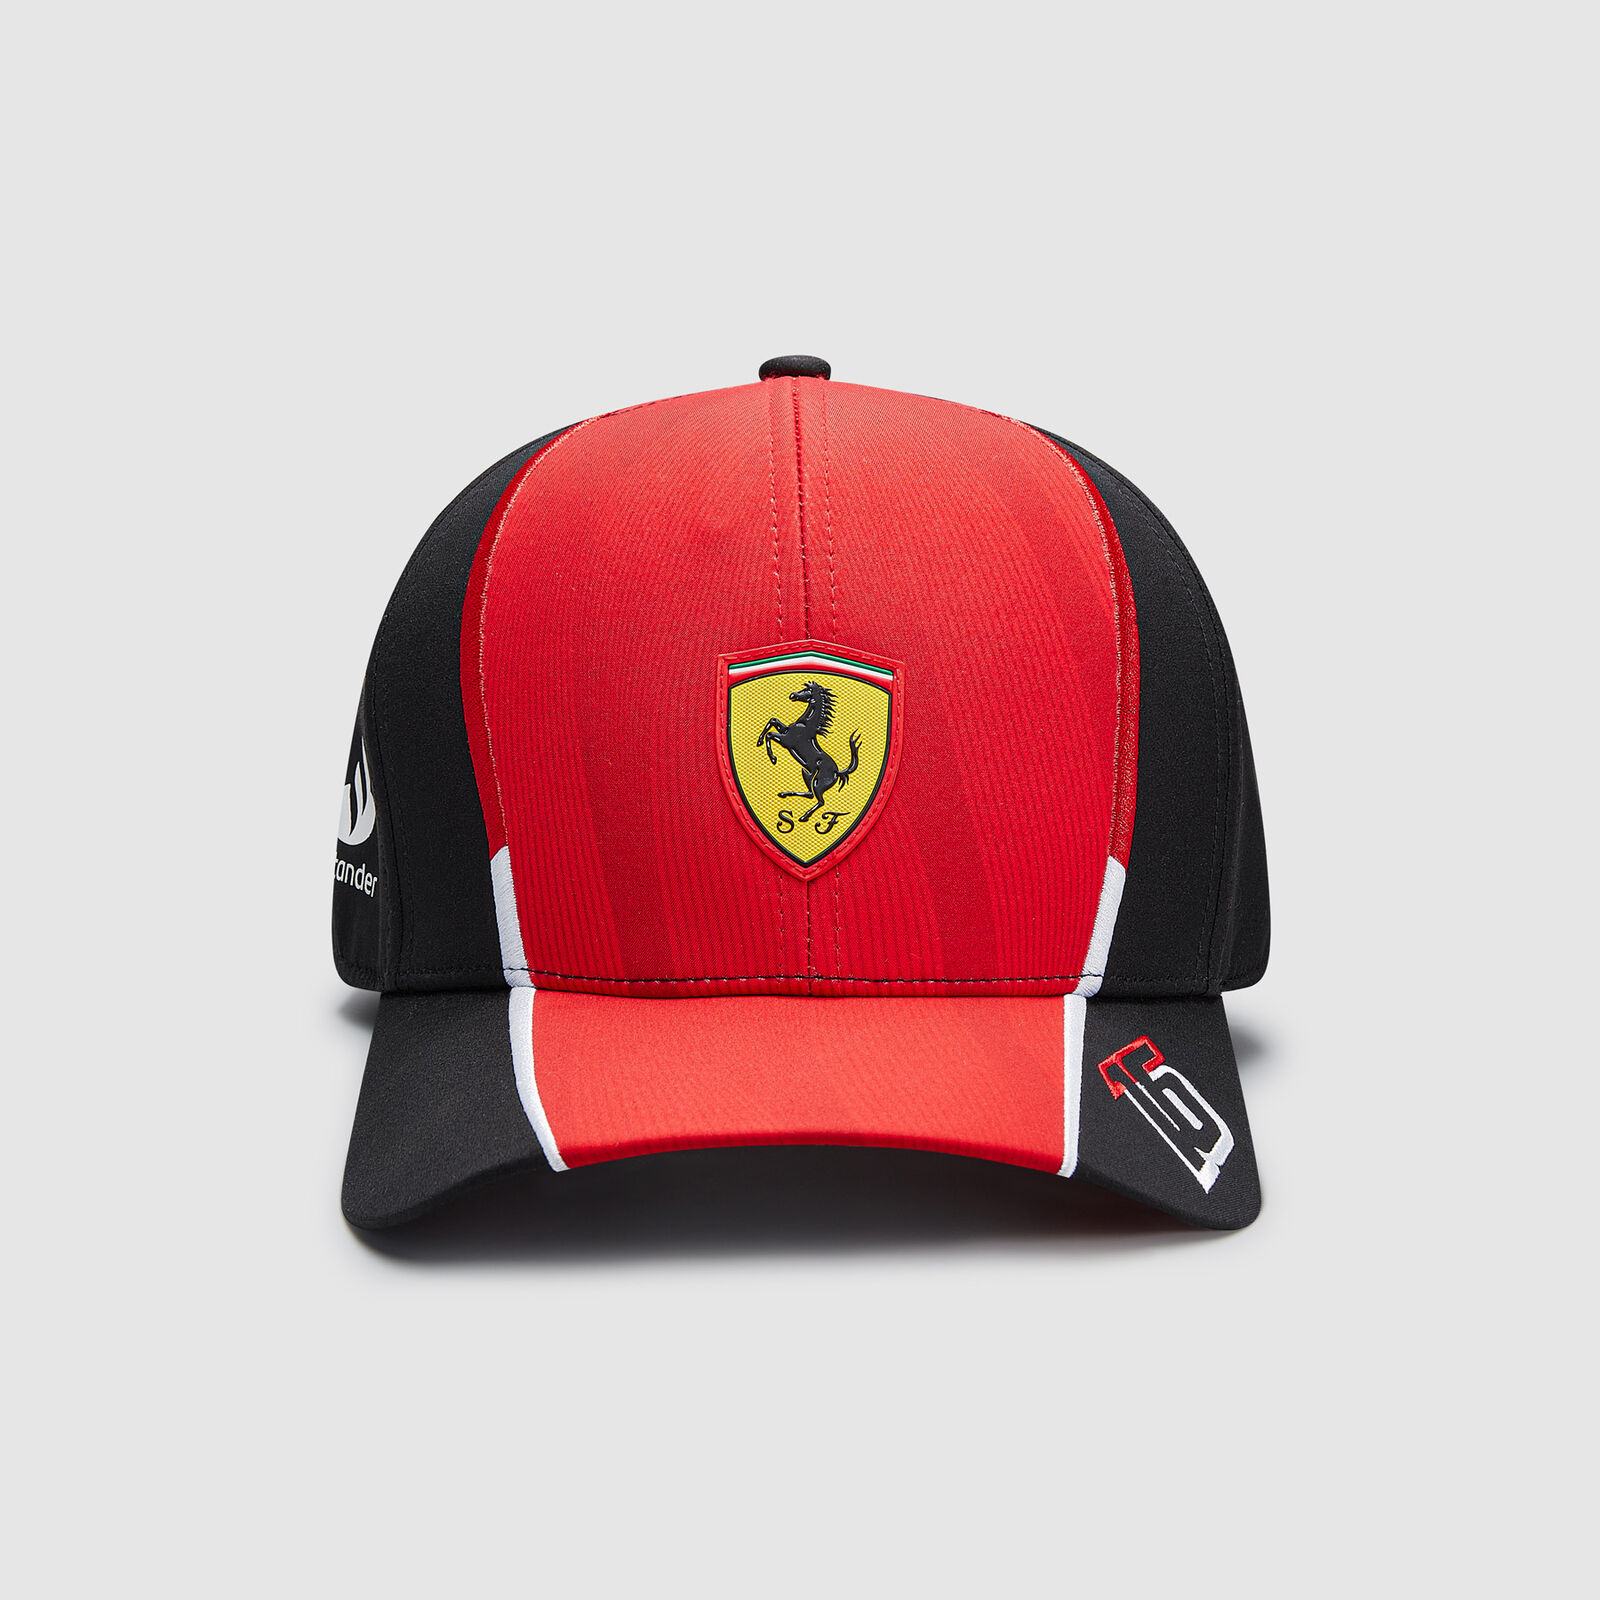 2023 Leclerc Driver Hat - Scuderia Ferrari | For Fans